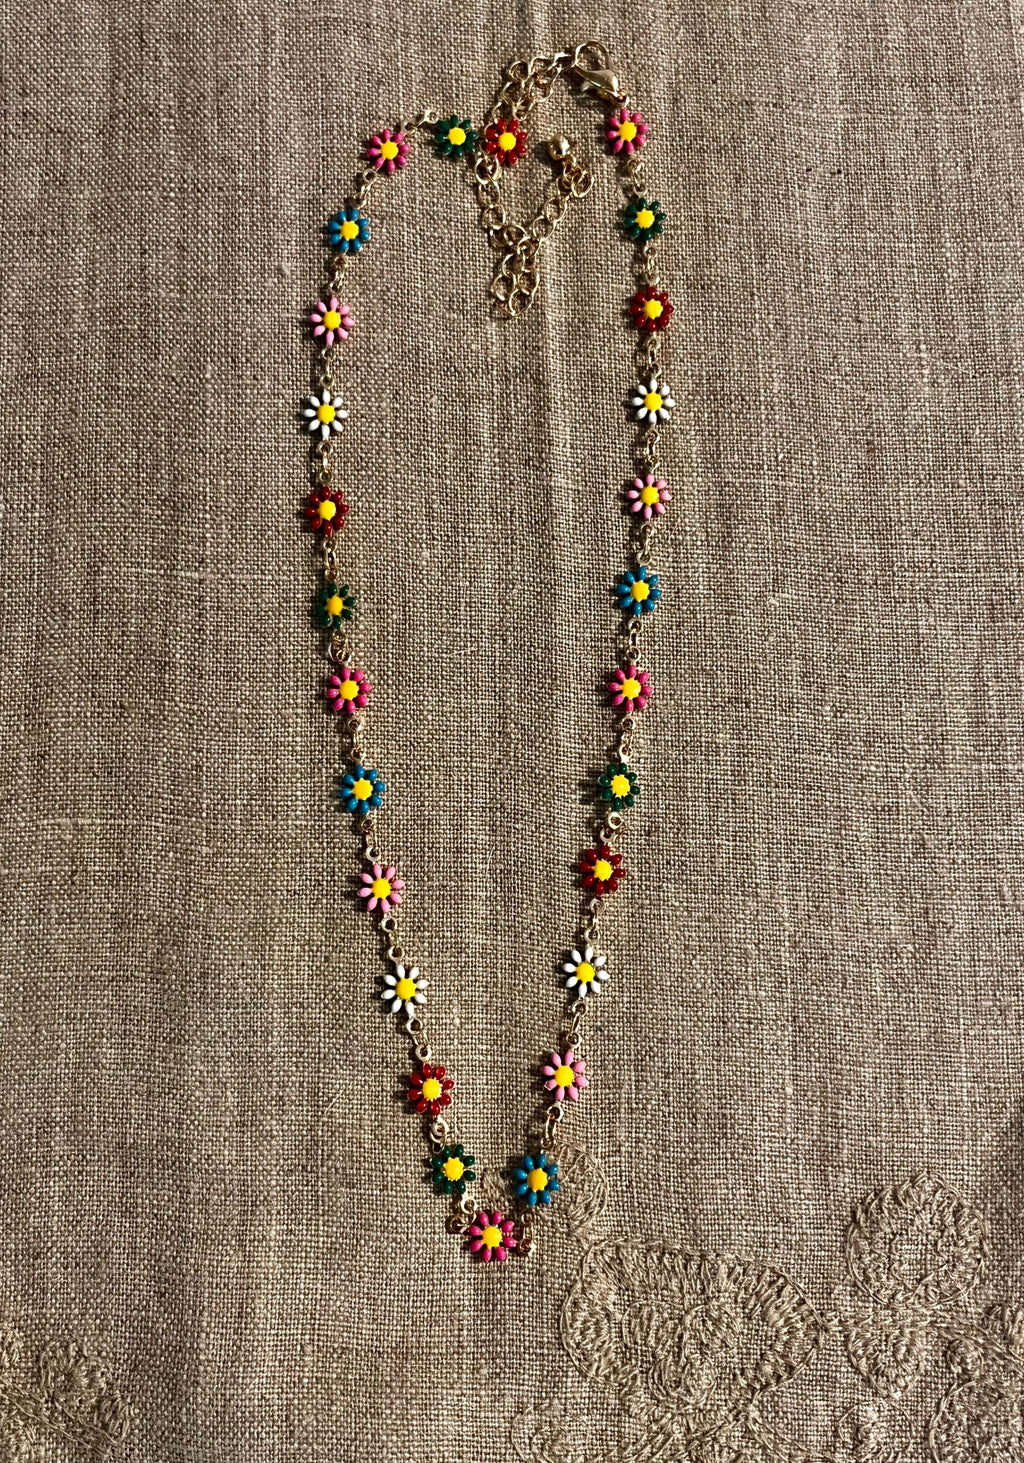 Bright Daisy Field Necklace